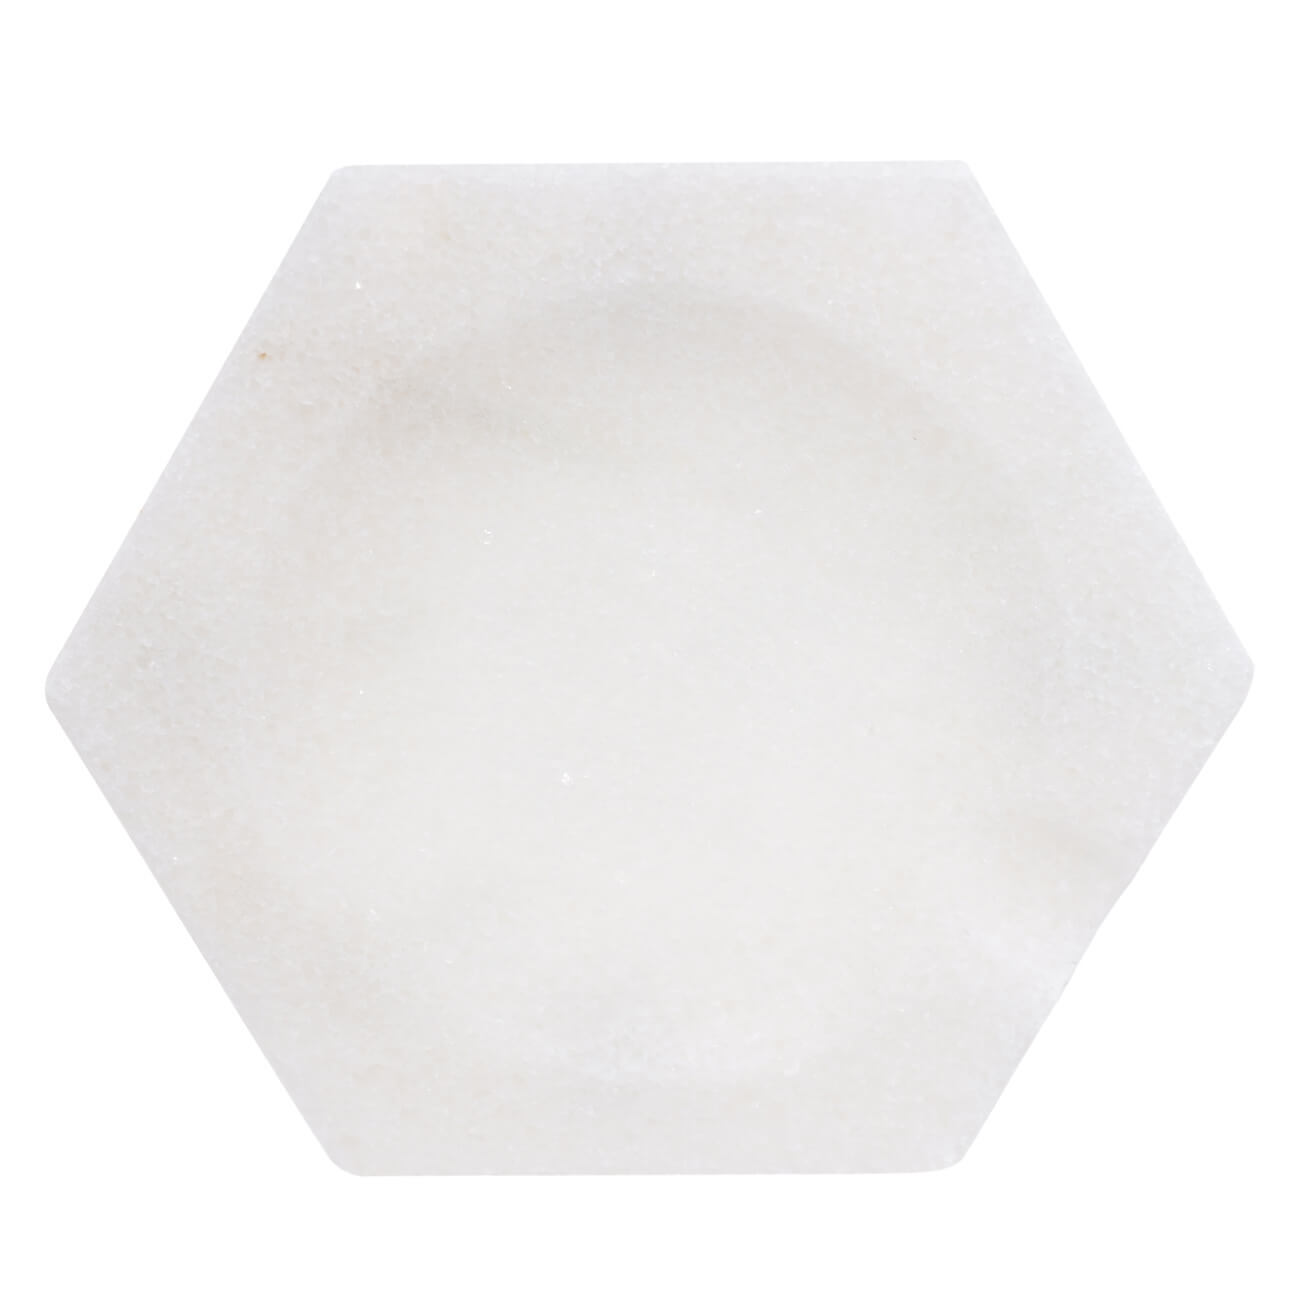 Подставка под ложку, 13х15 см, мрамор, белая, Шестигранник, Marble - фото 1